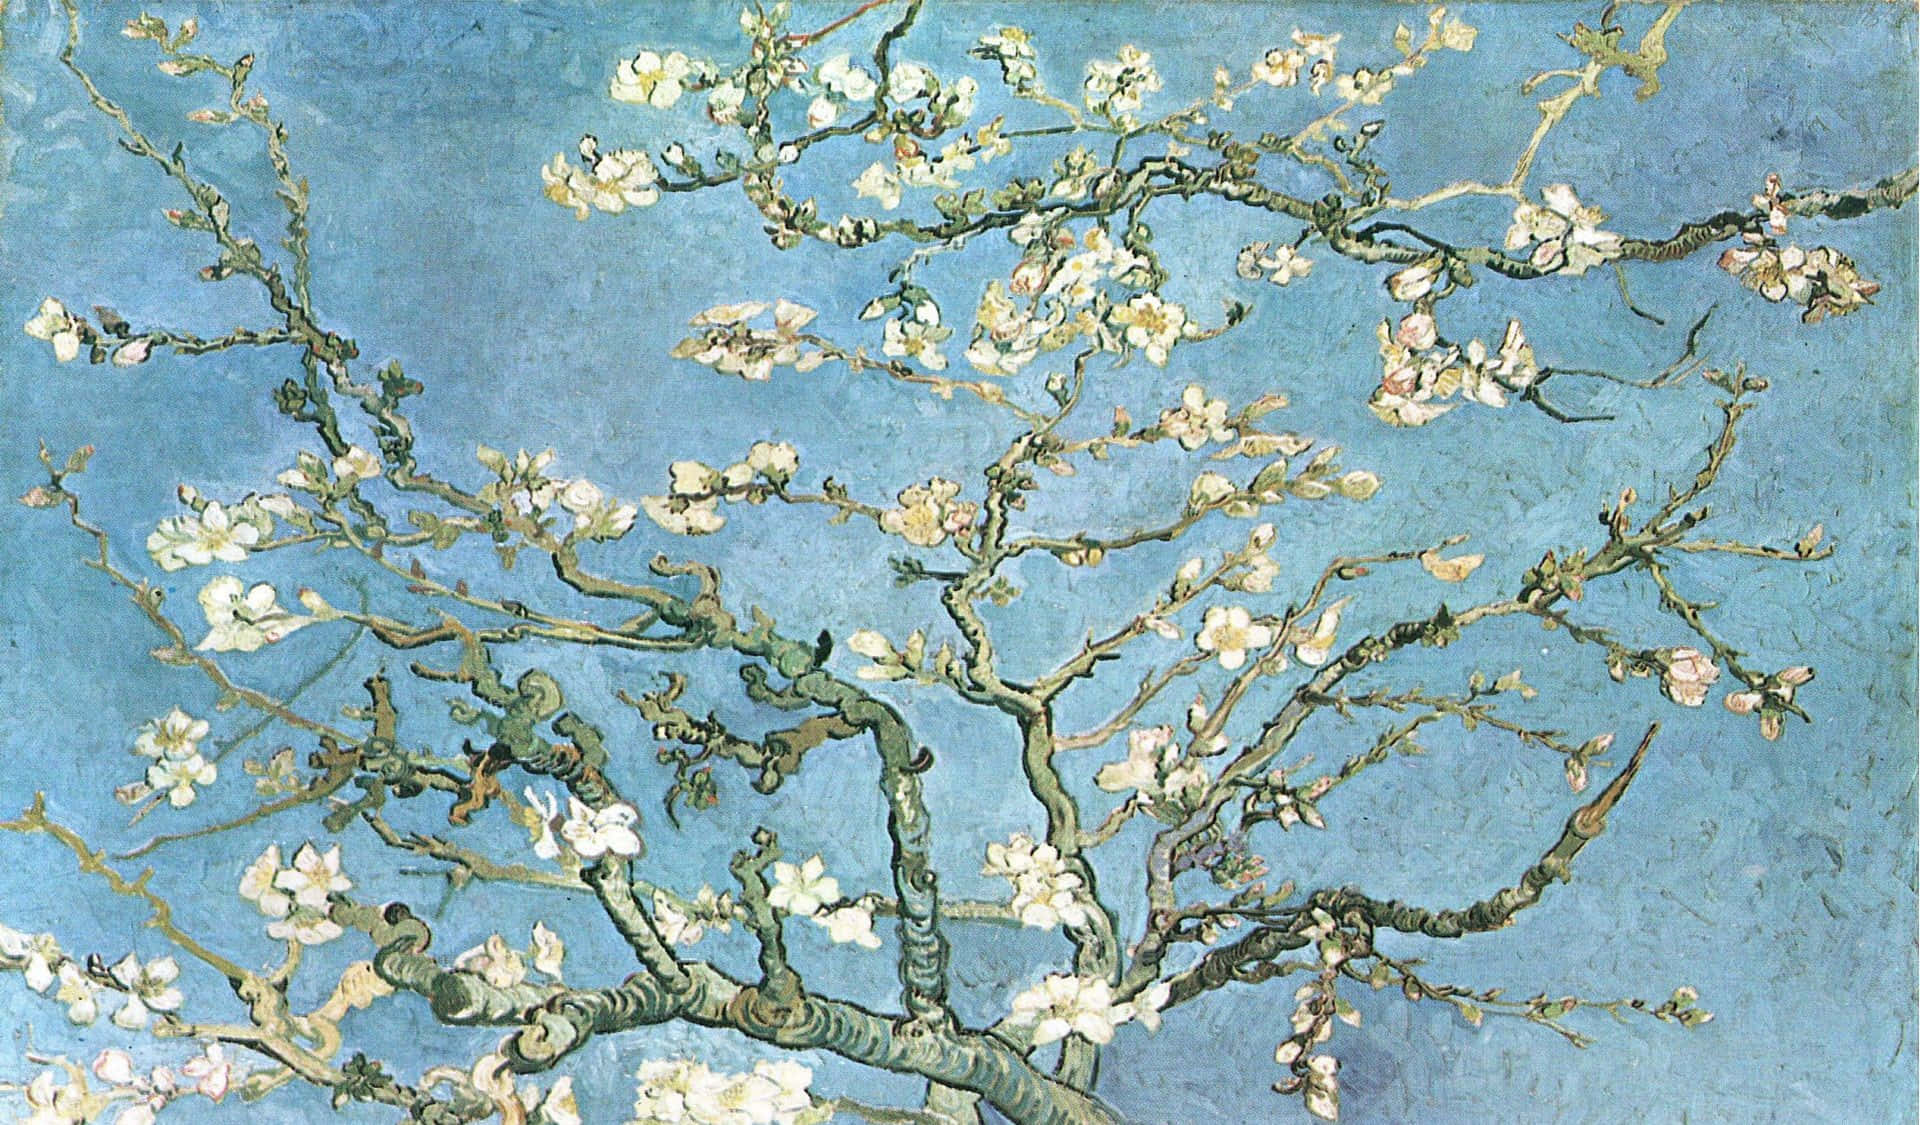 Vincentvan Goghs Ikoniska Målning 